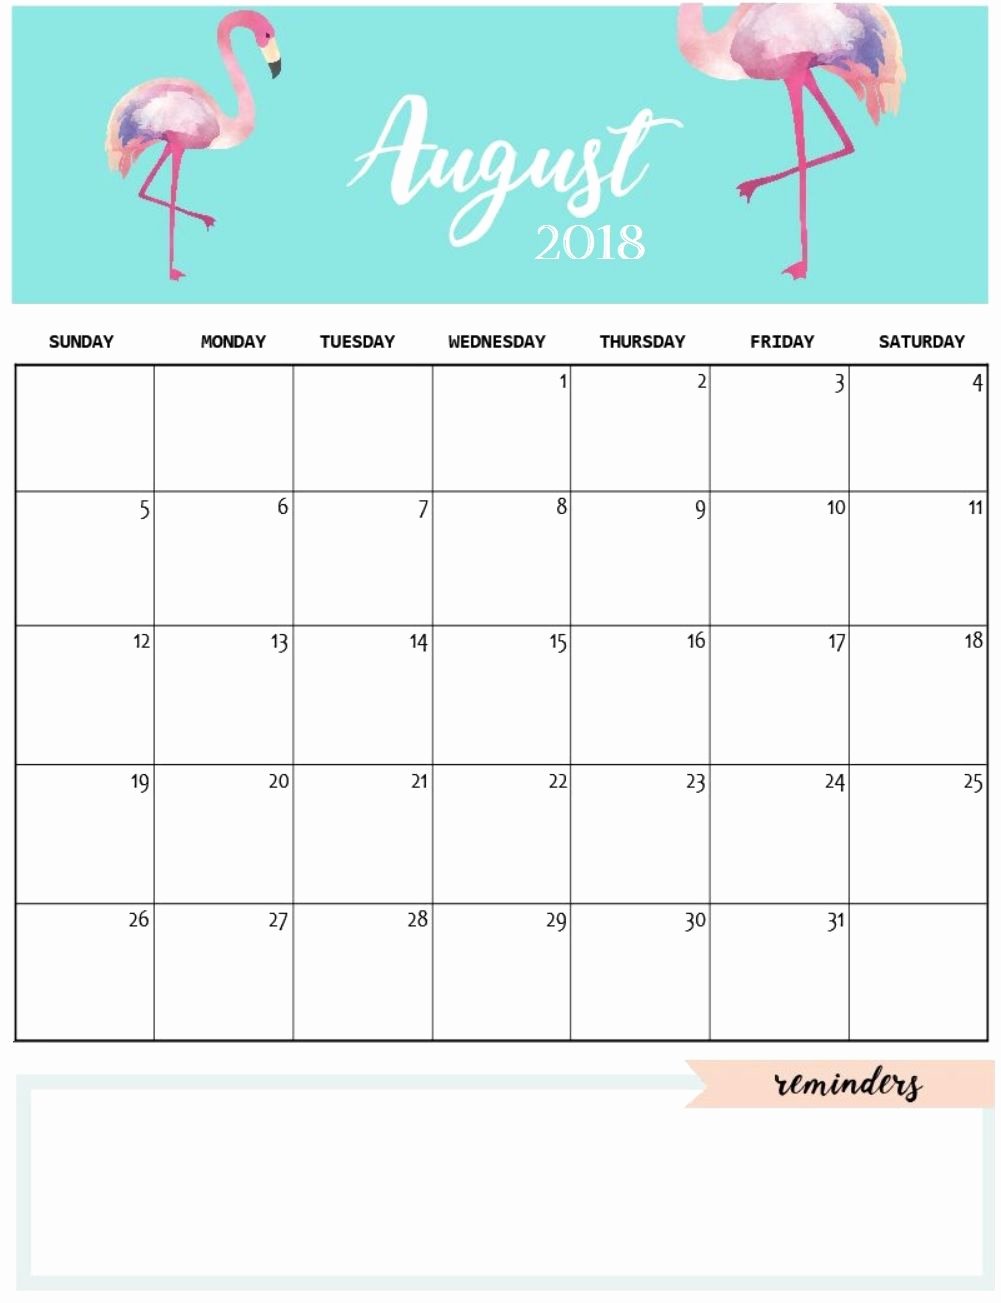 Cute Calendar Template 2019 Lovely Cute August 2018 Calendar Template Calendars